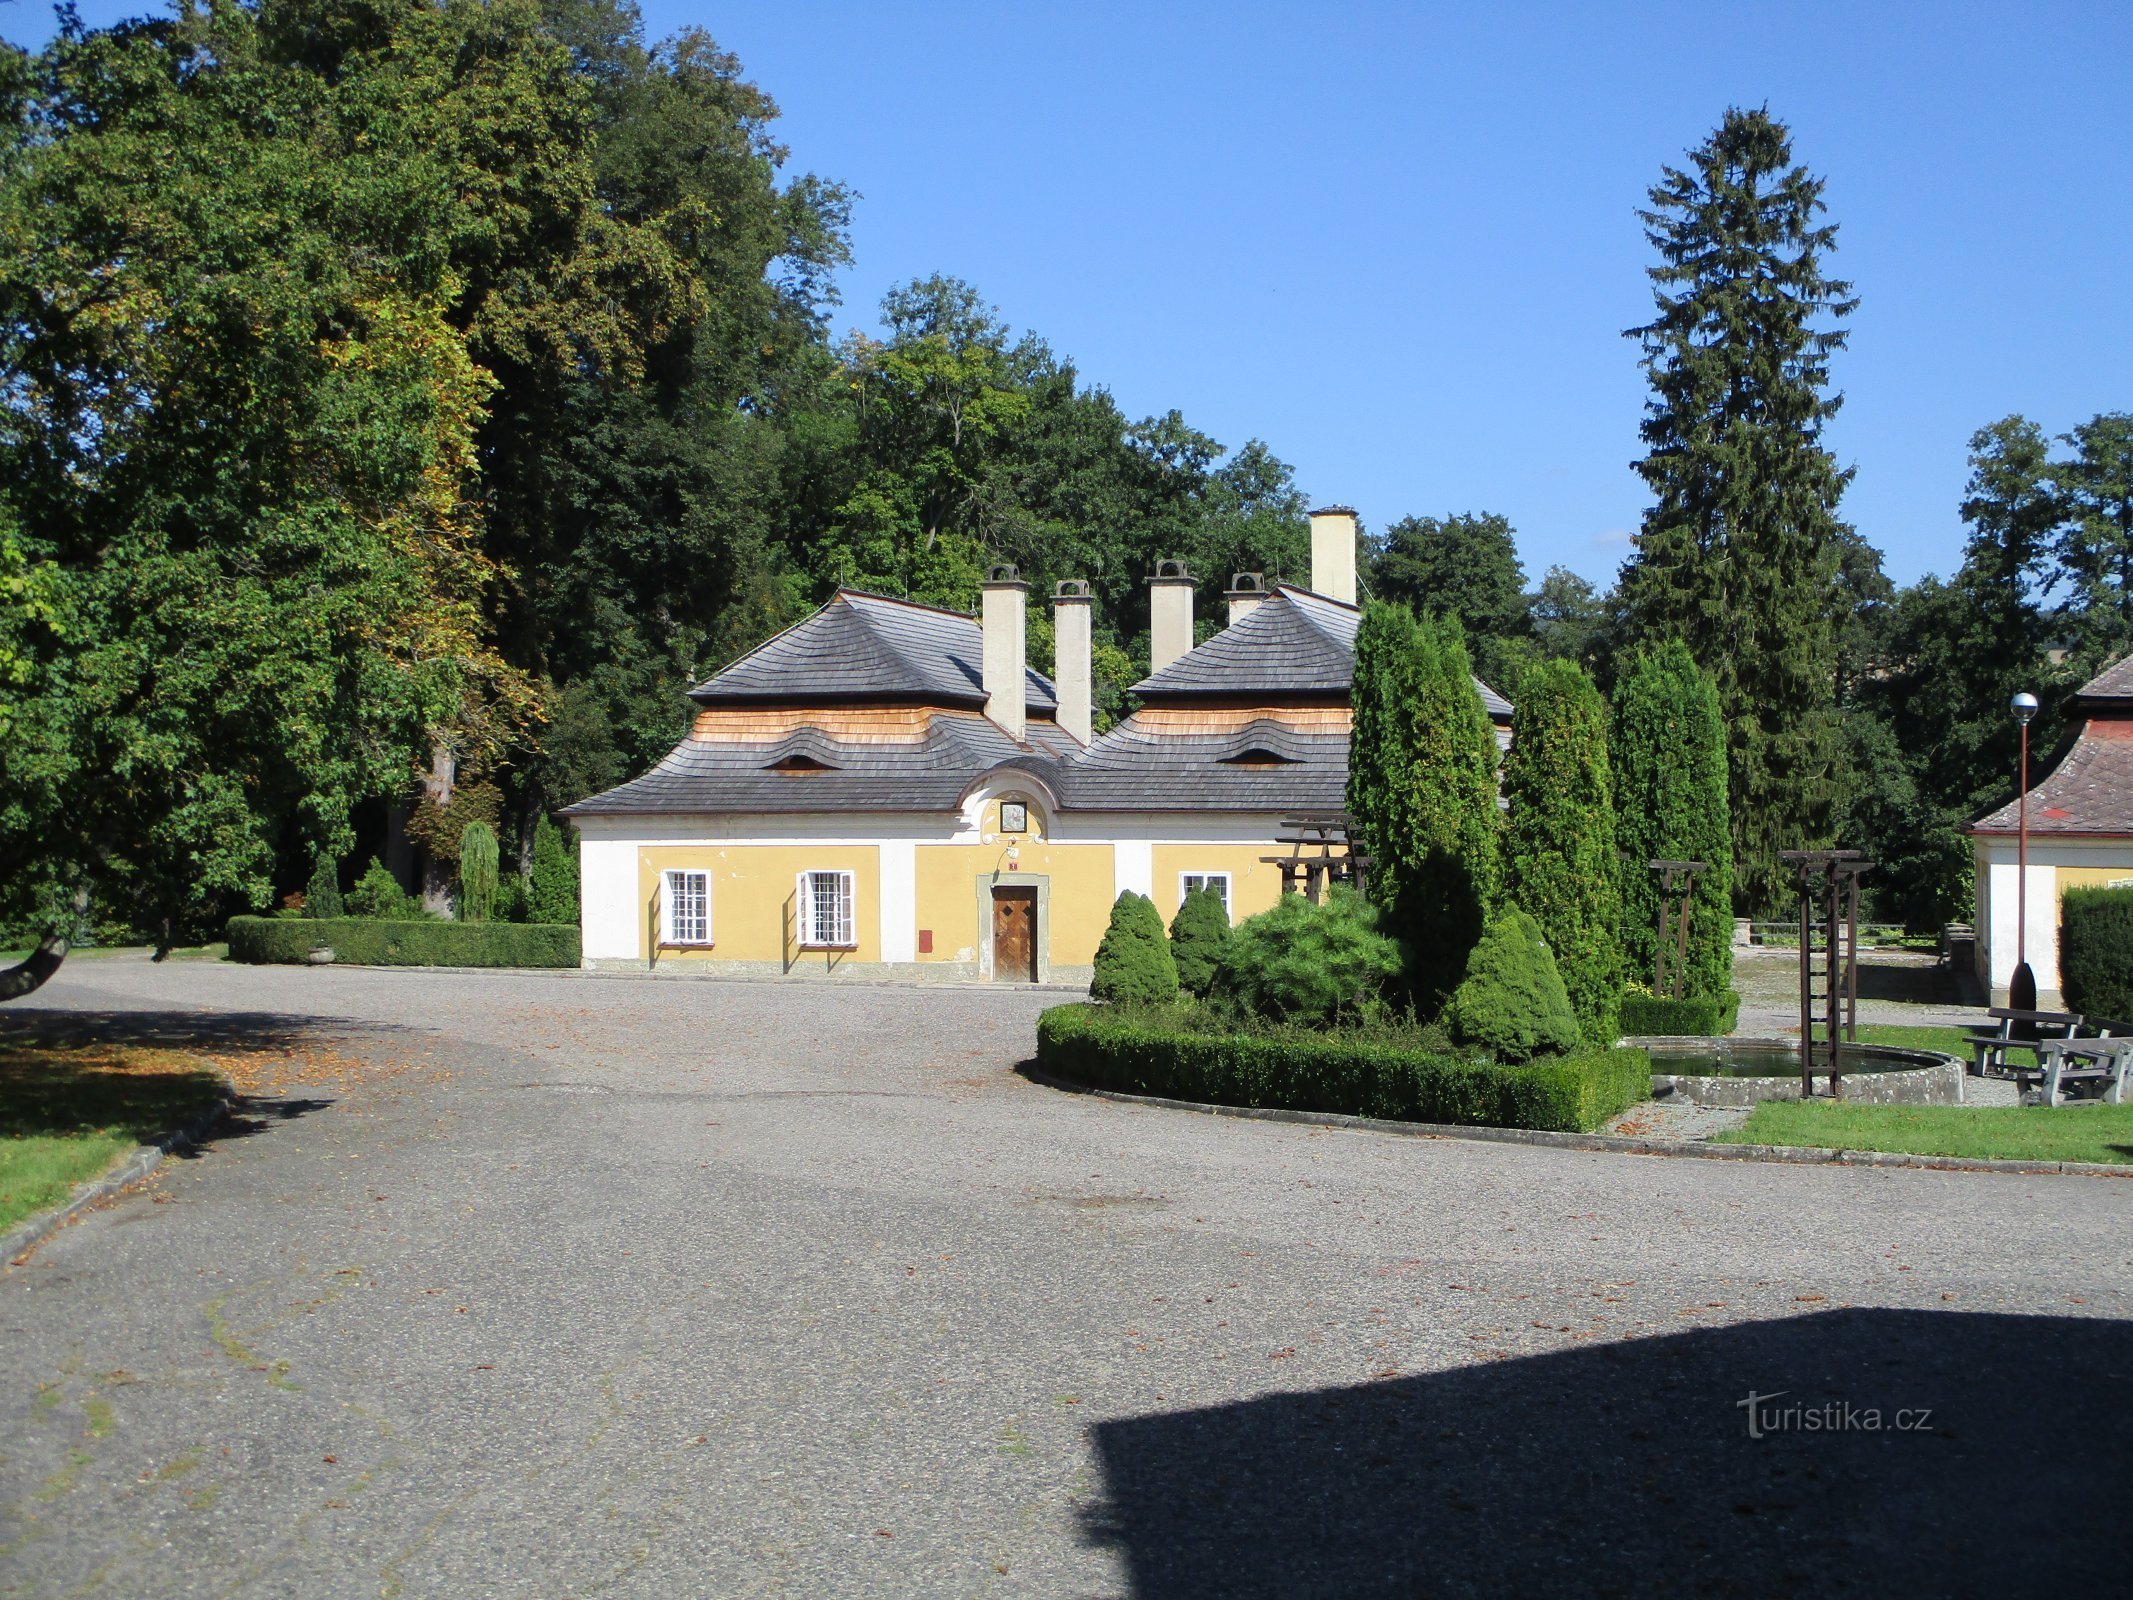 Castle grounds (Bílé Poličany, 11.9.2020/XNUMX/XNUMX)